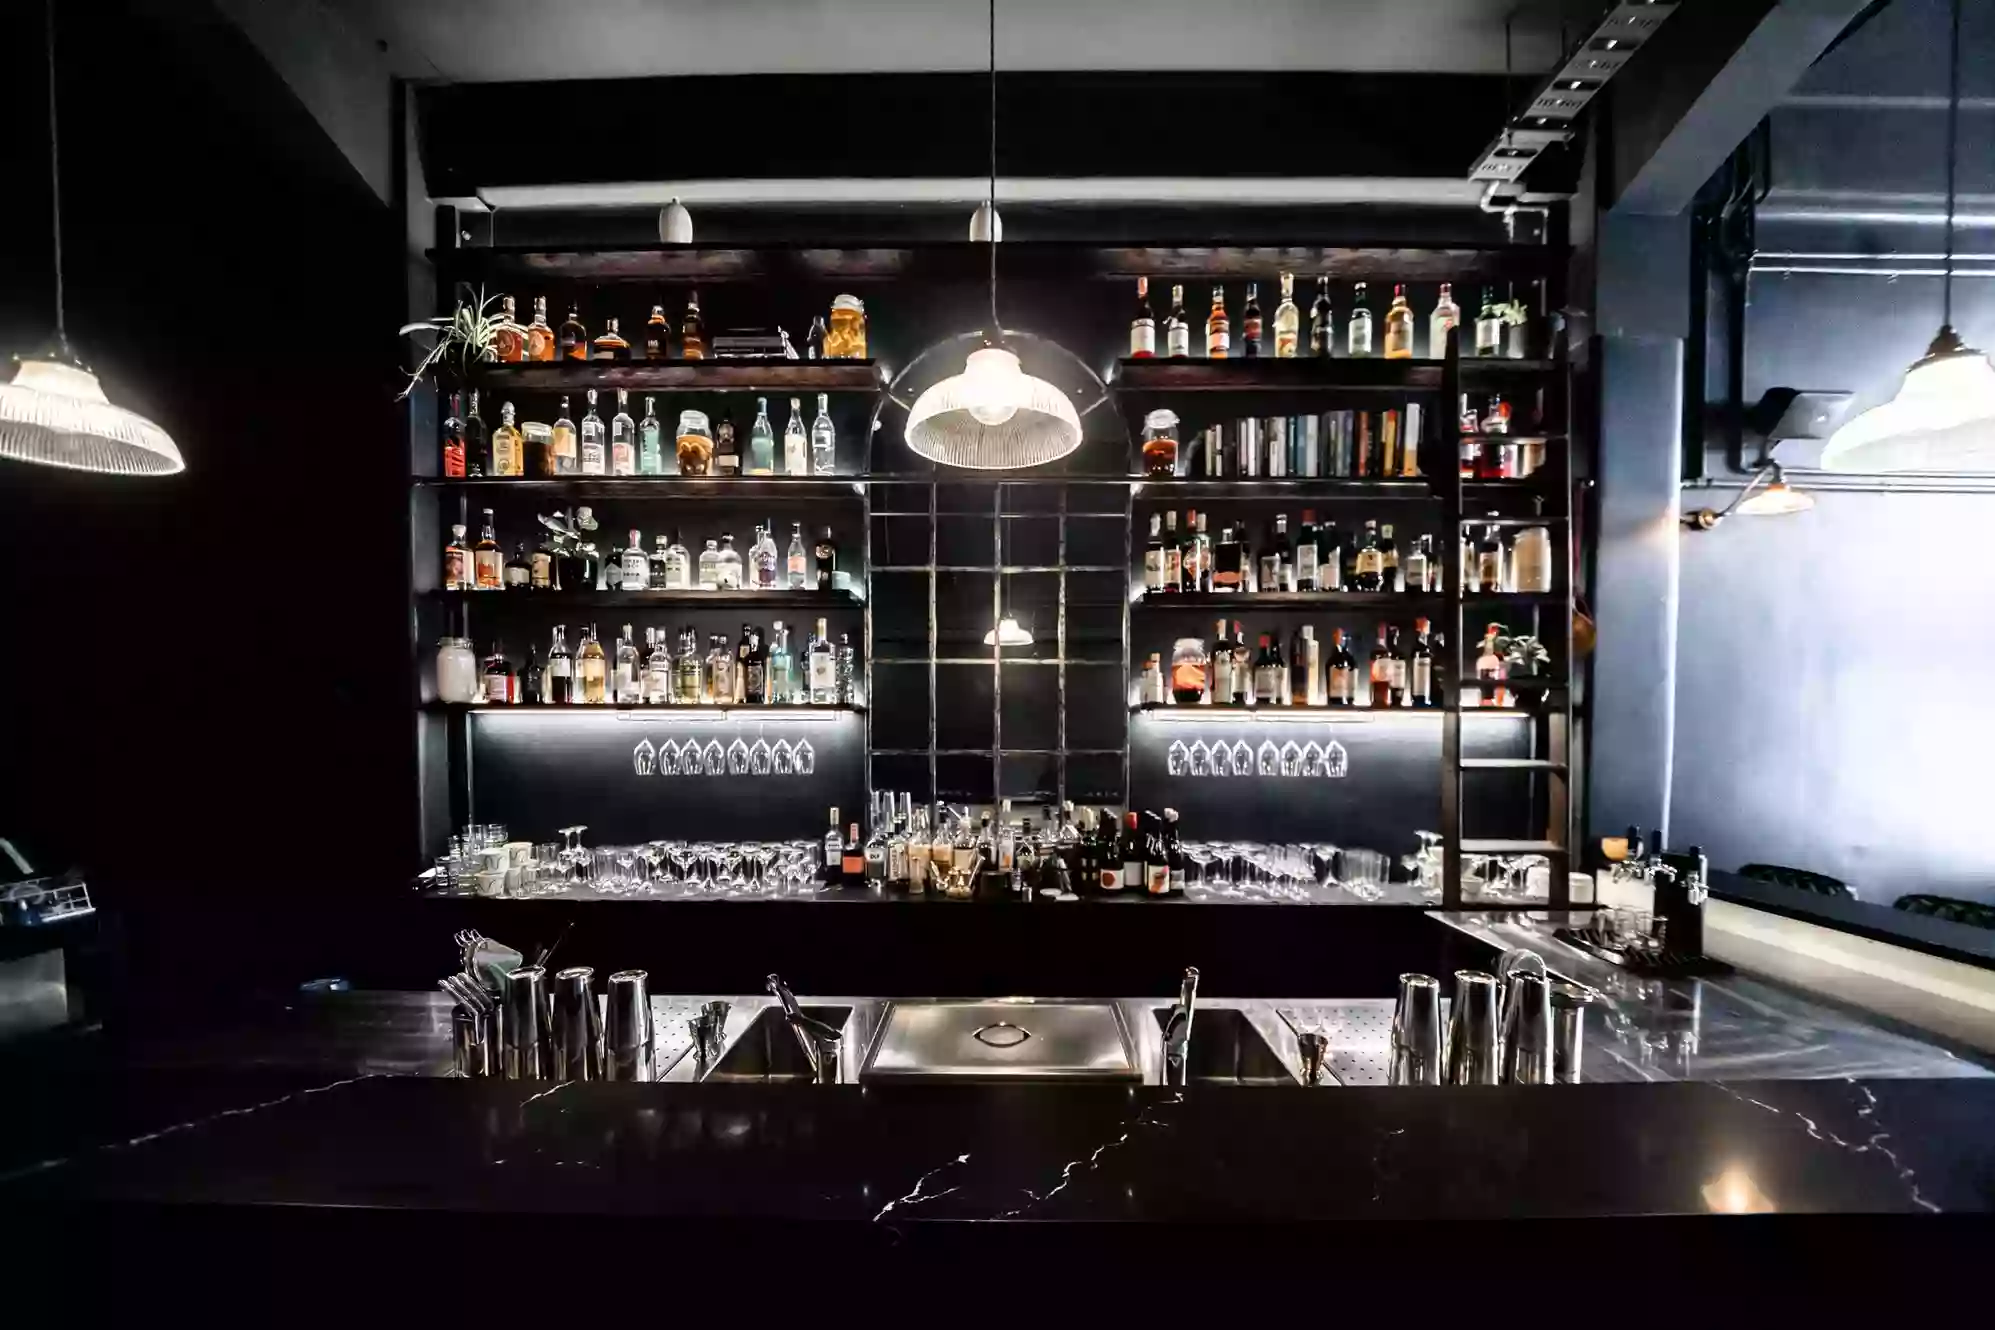 Teresa Cocktail Bar